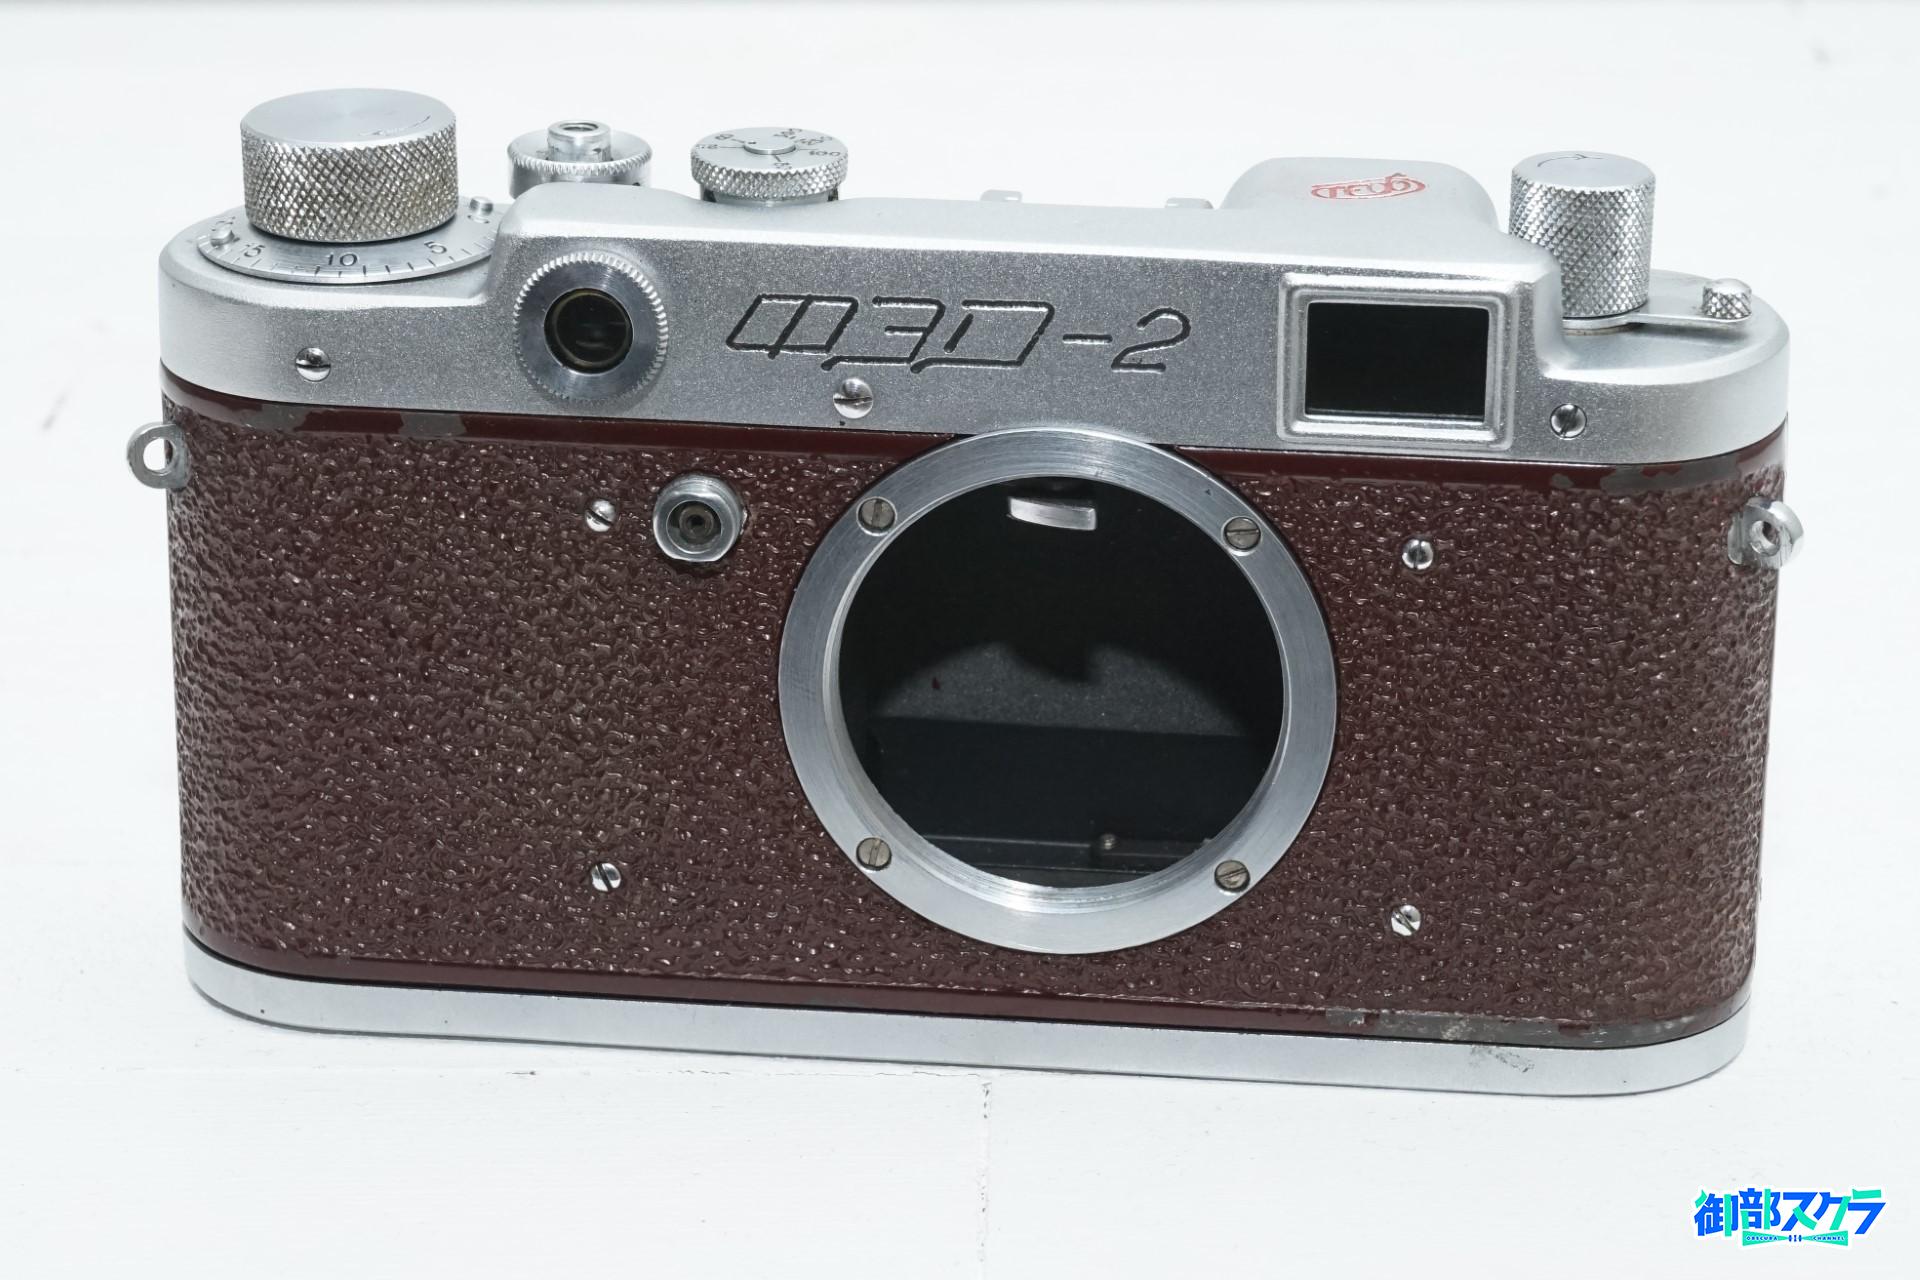 FED-2 旧ソ連製レンジファインダーカメラの特徴・Zorki-4との比較 – 御